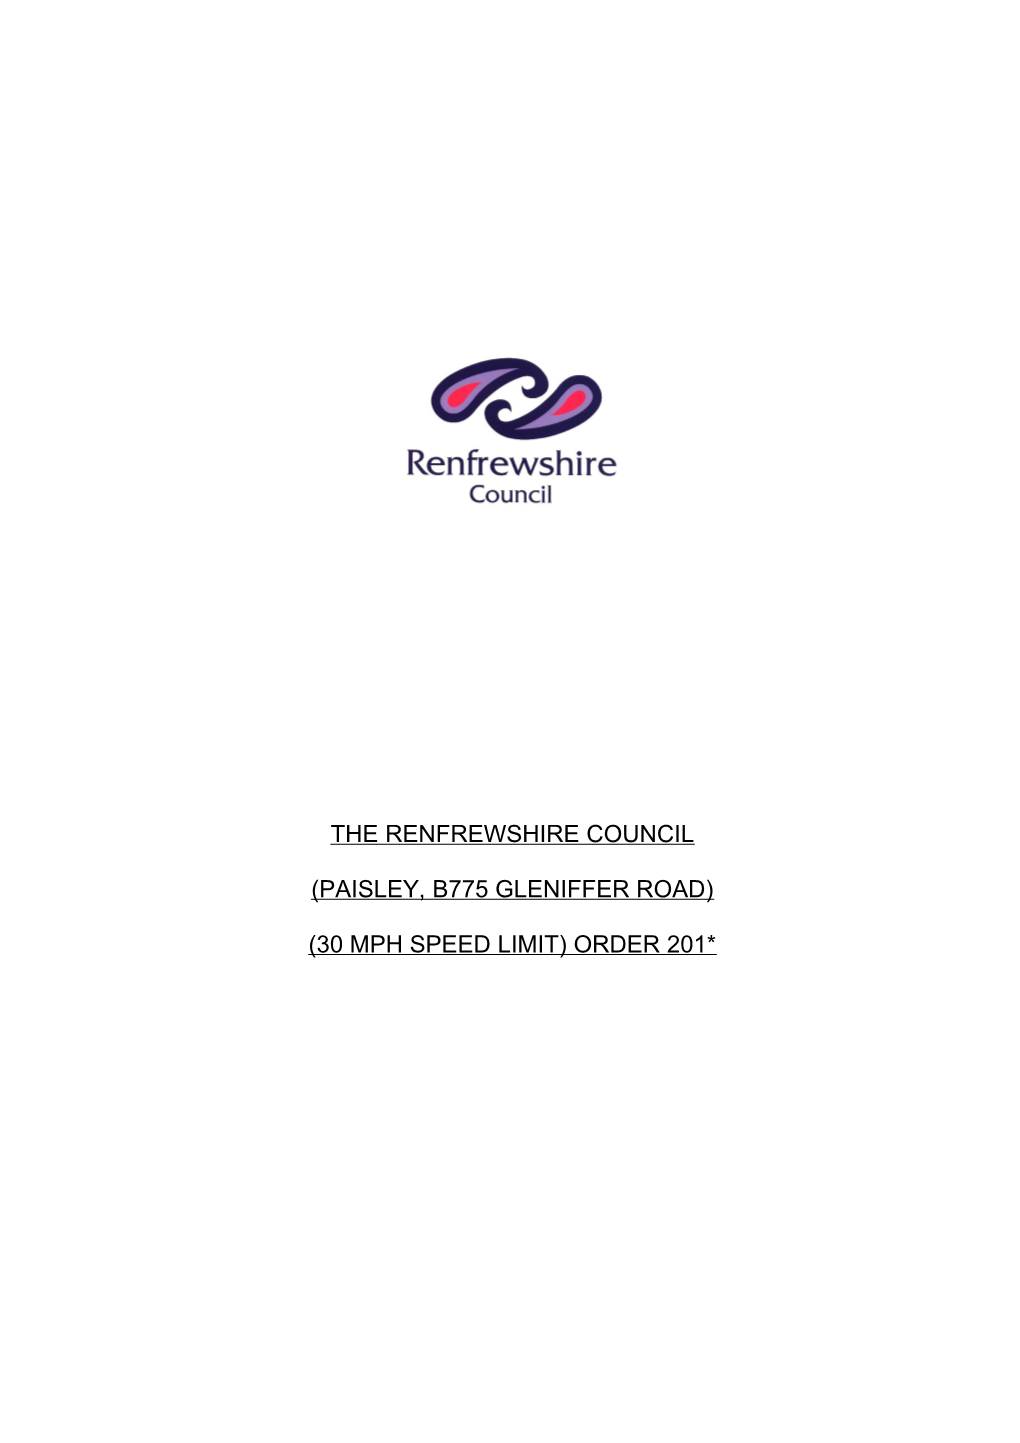 The Renfrewshire Council